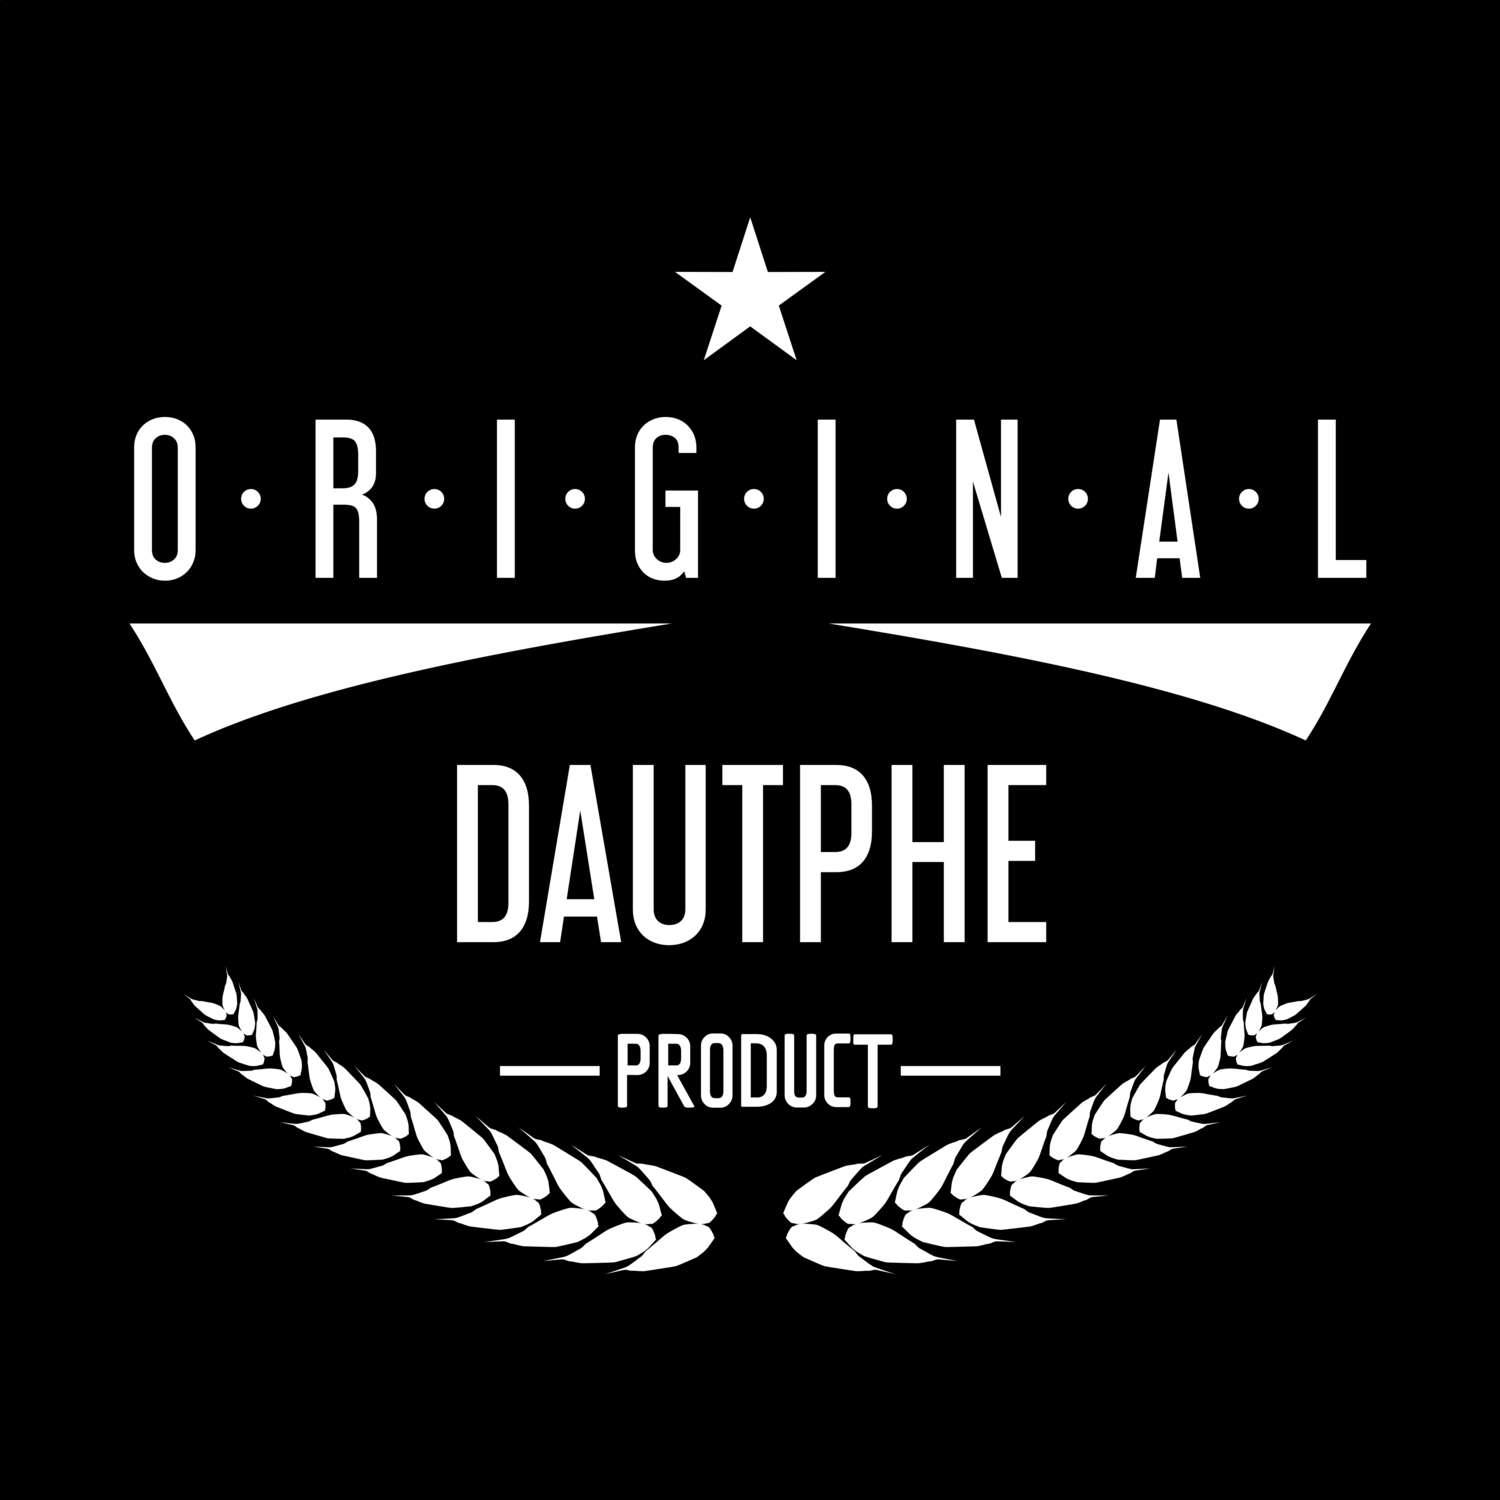 Dautphe T-Shirt »Original Product«